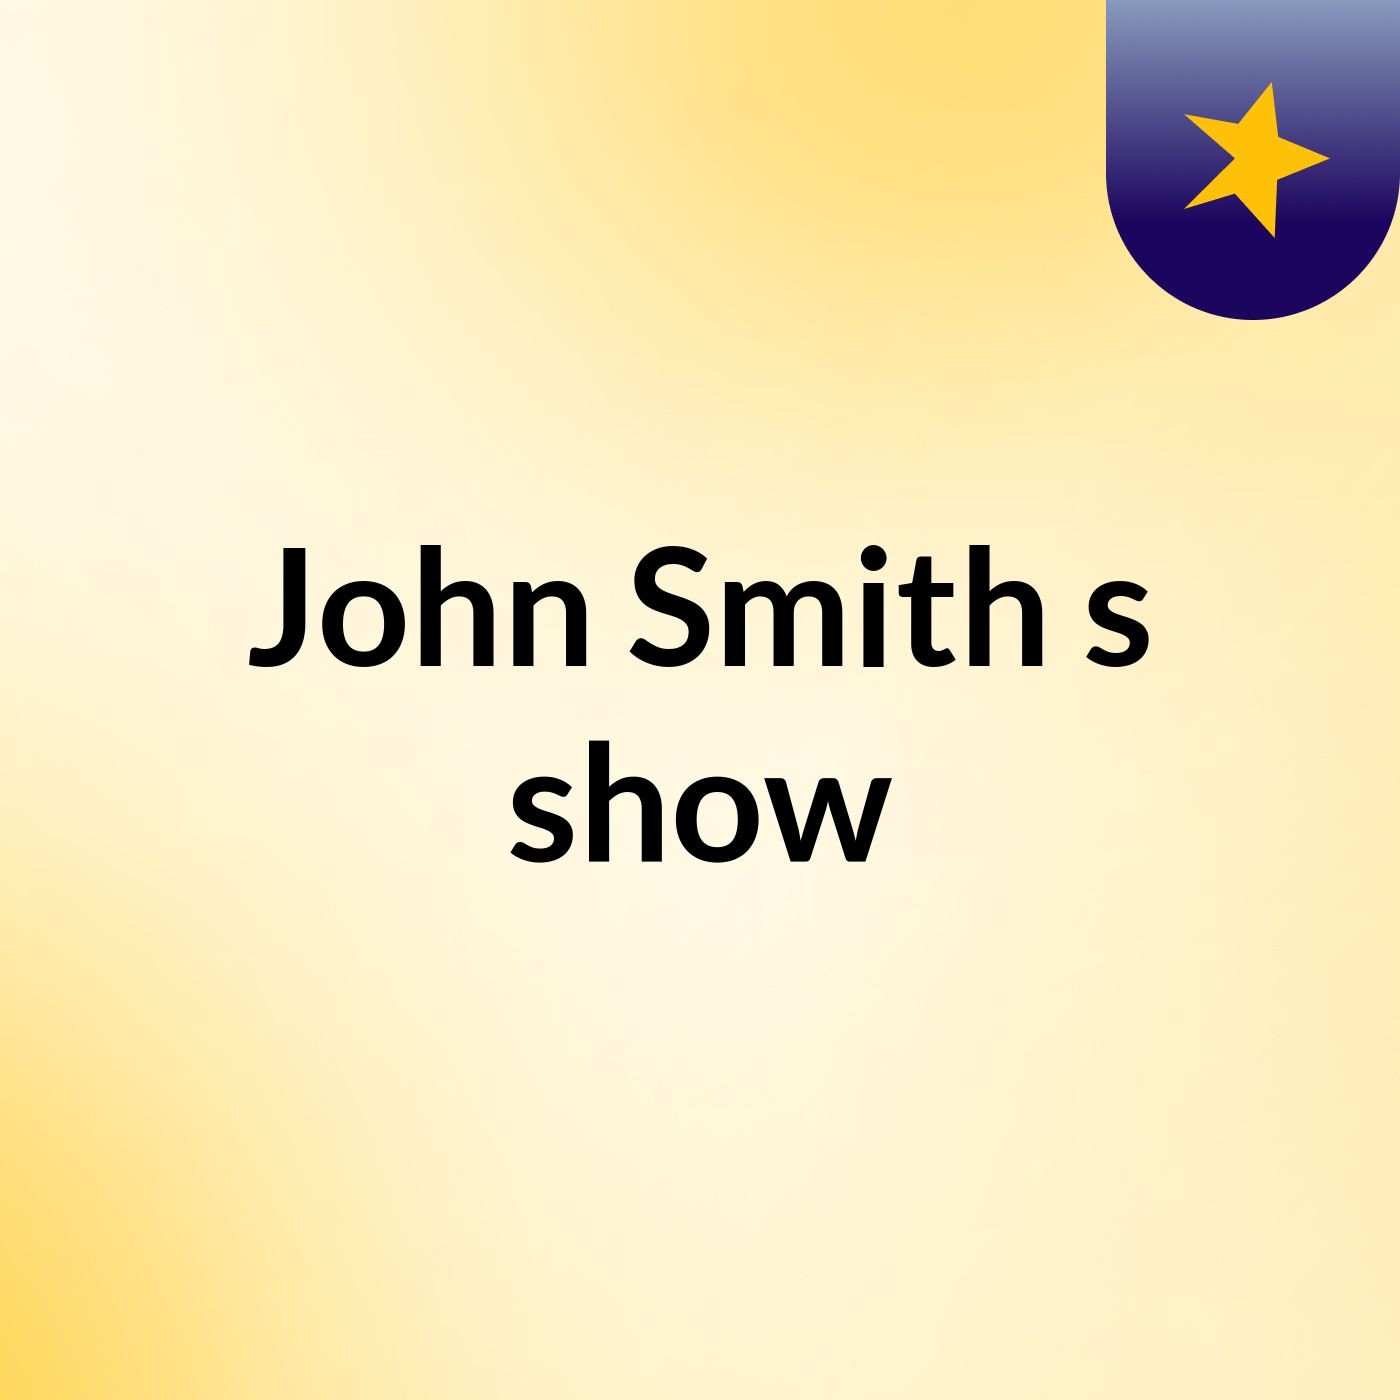 John Smith's show